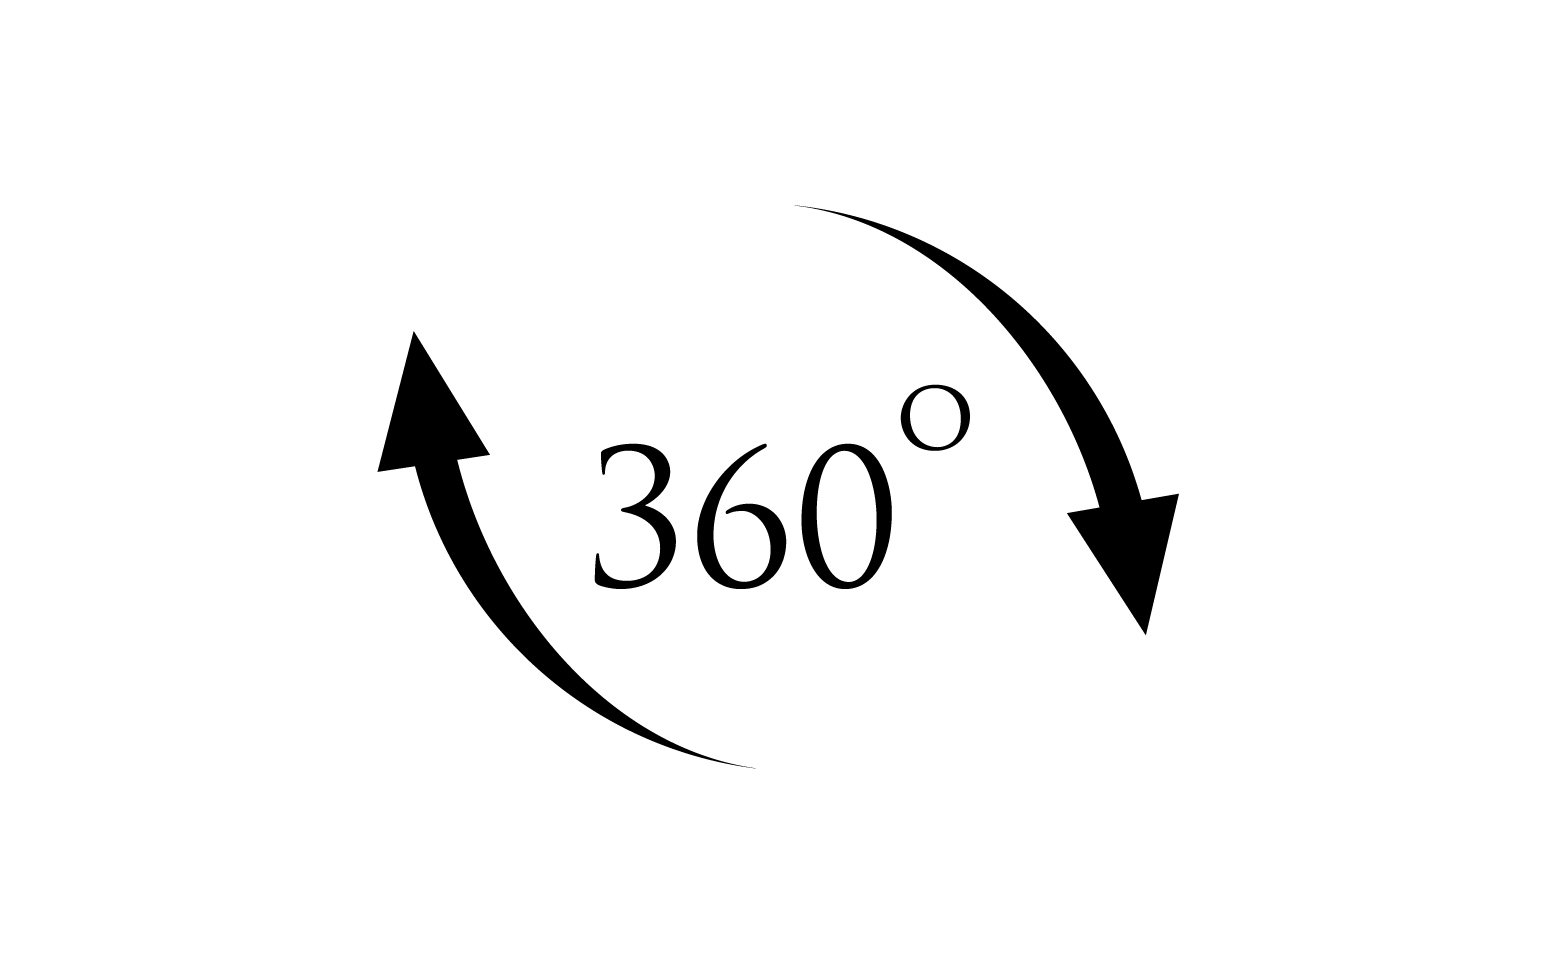 360 degree angle rotation icon symbol logo version v37